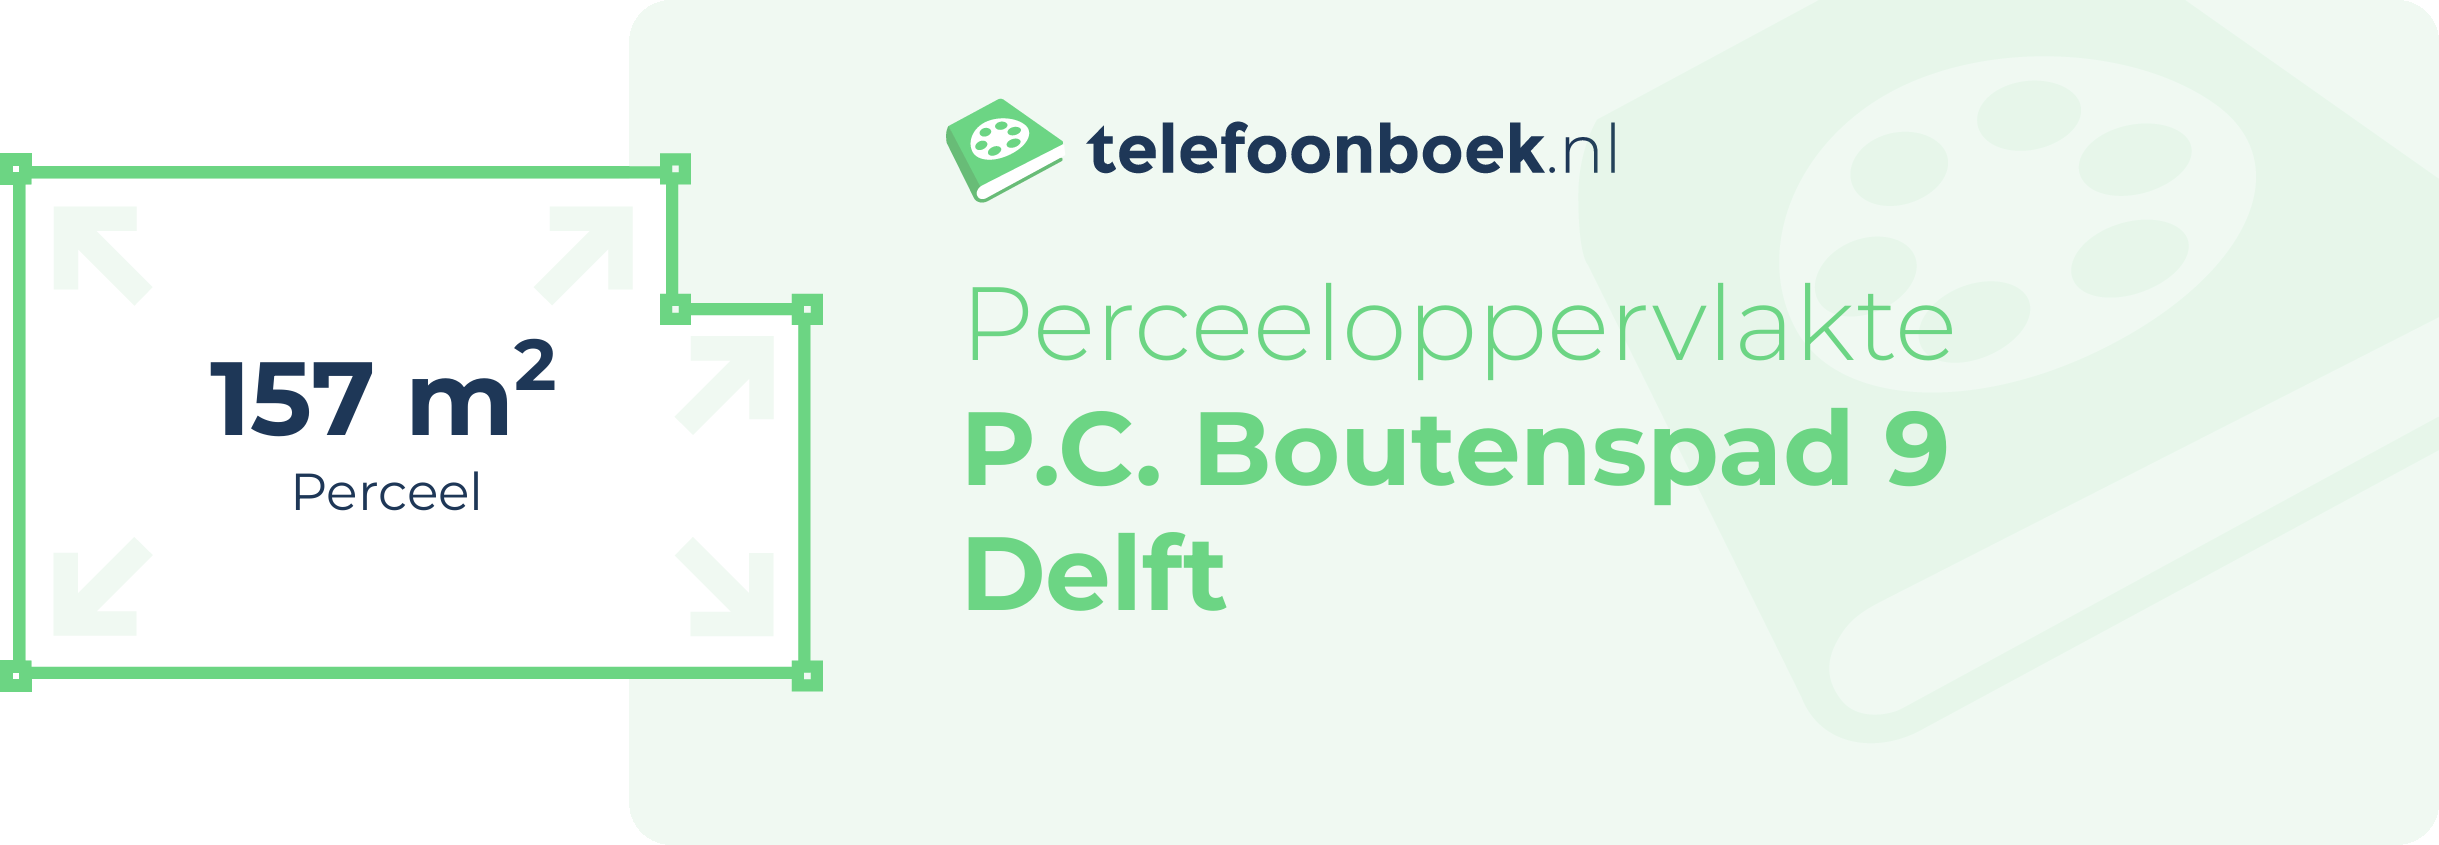 Perceeloppervlakte P.C. Boutenspad 9 Delft